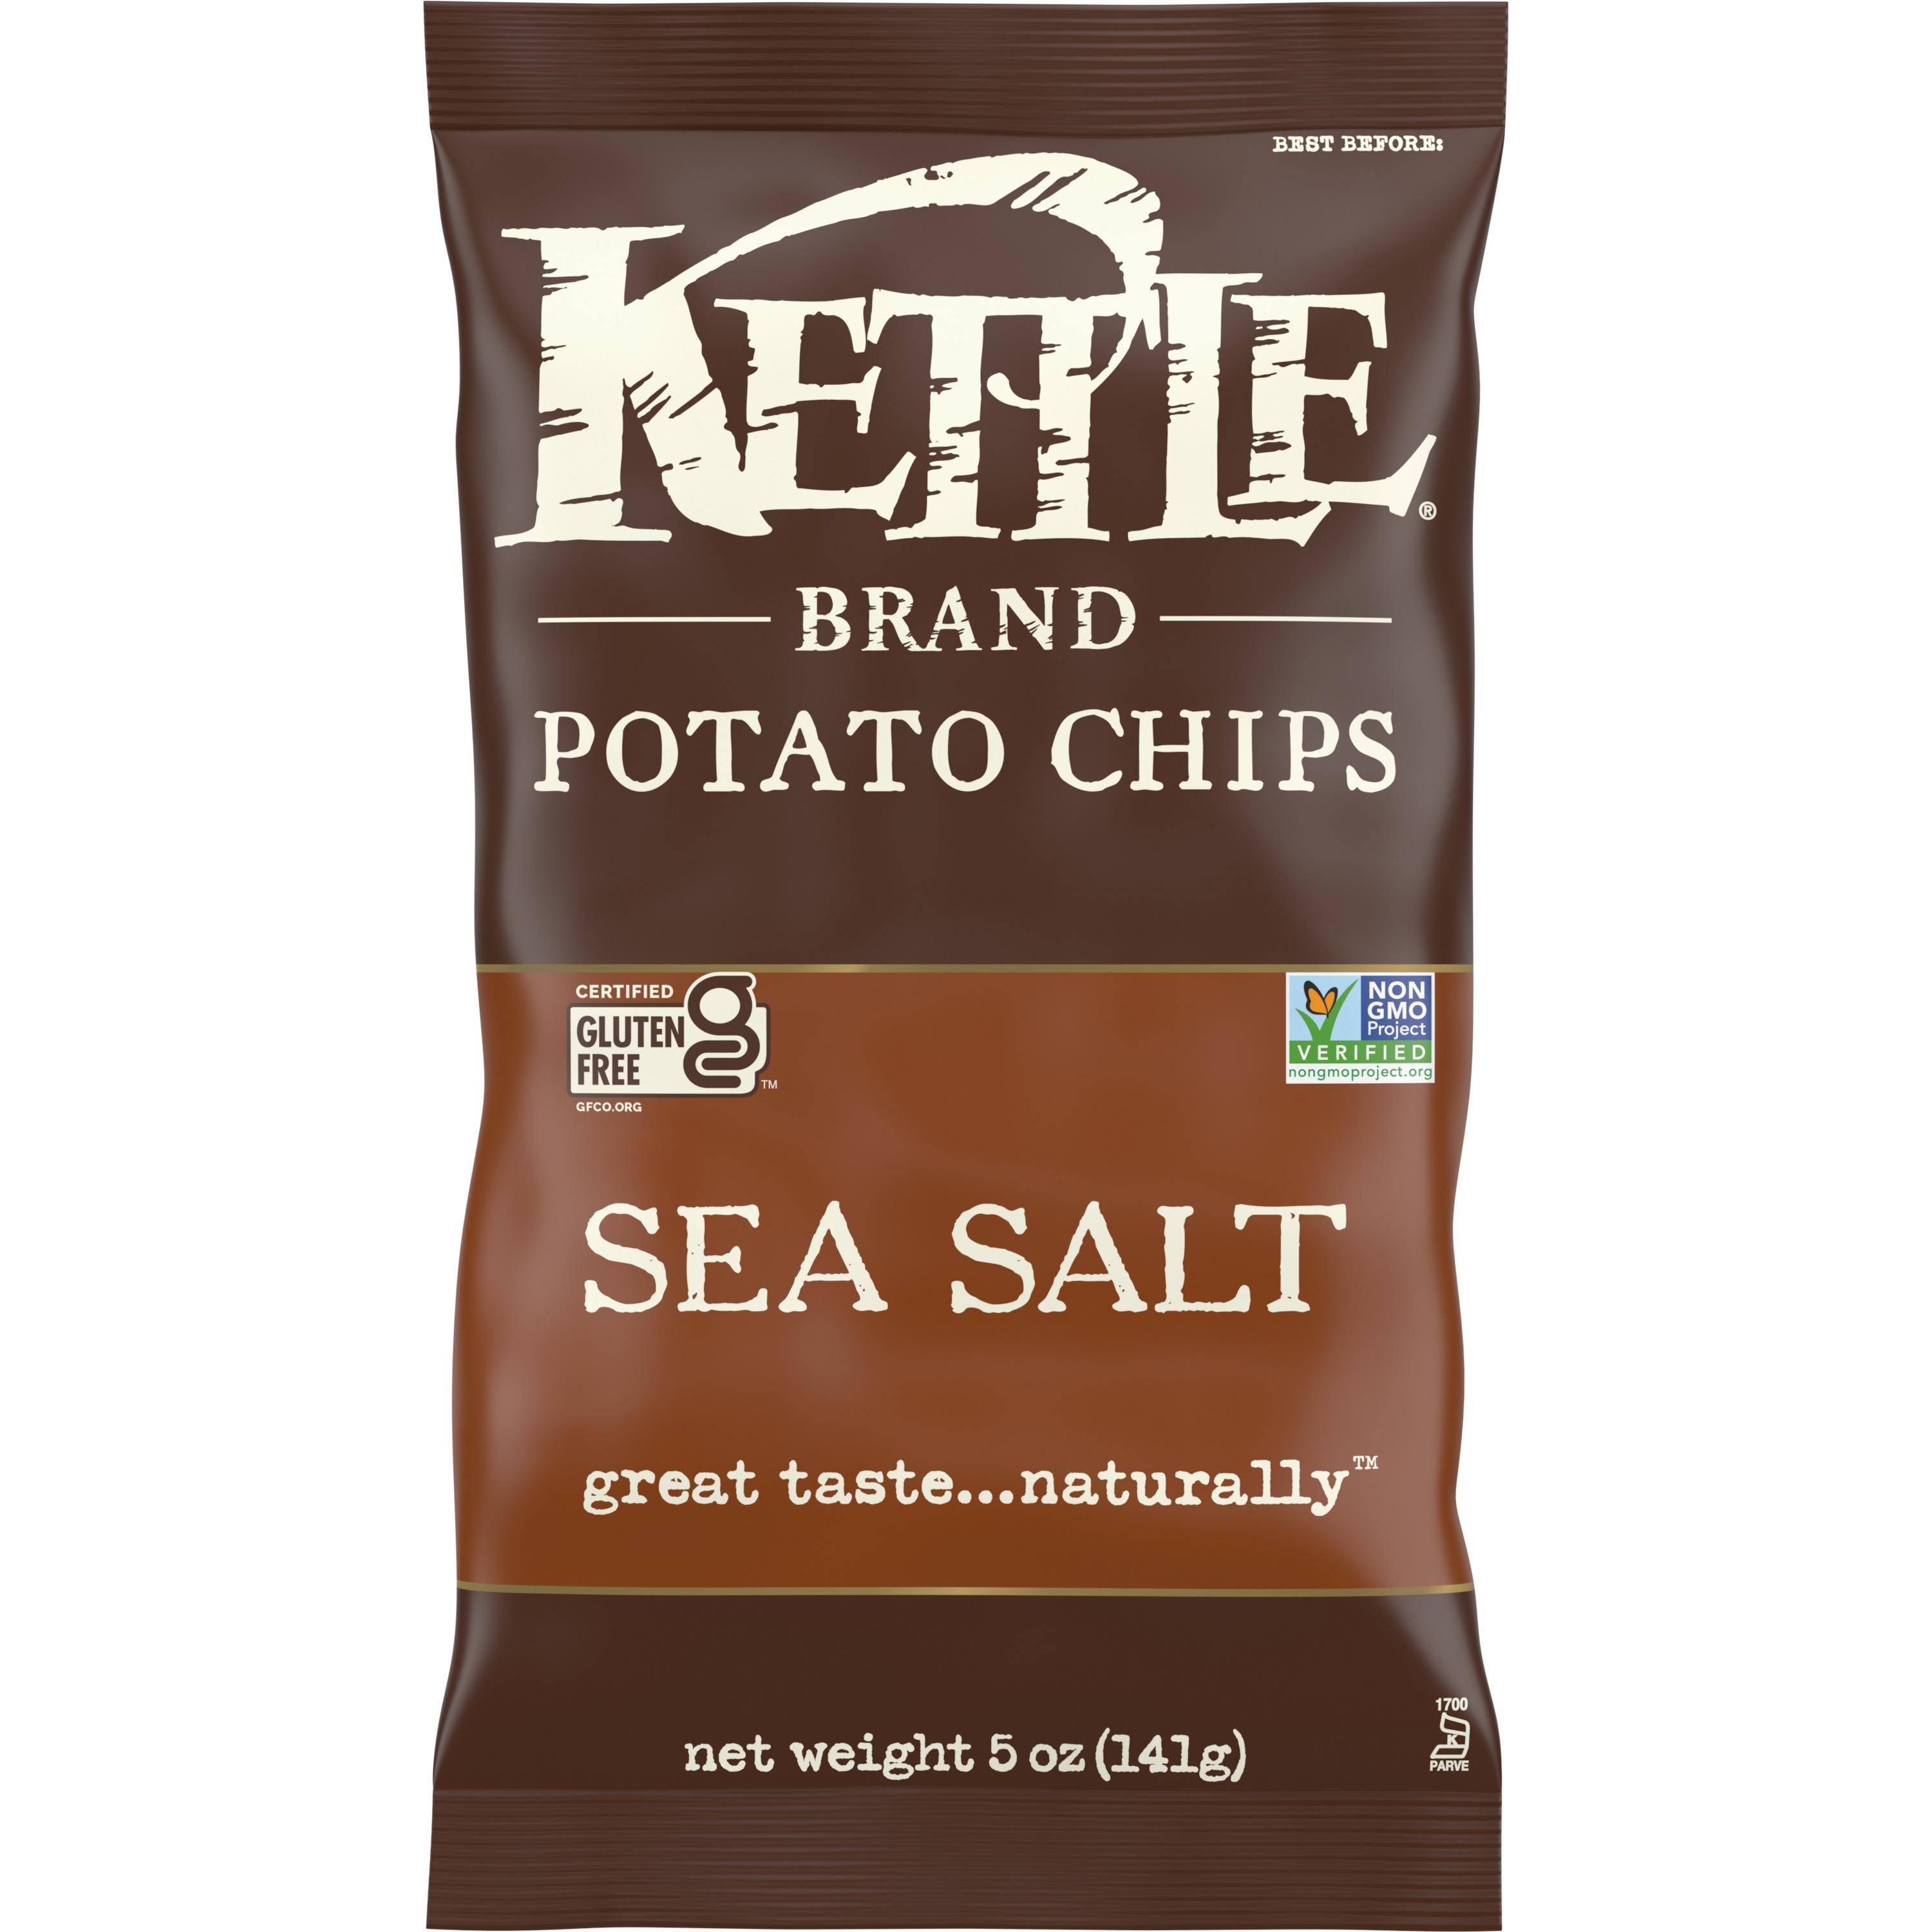 Kettle Brand Potato Chips - Sea Salt, 5 oz